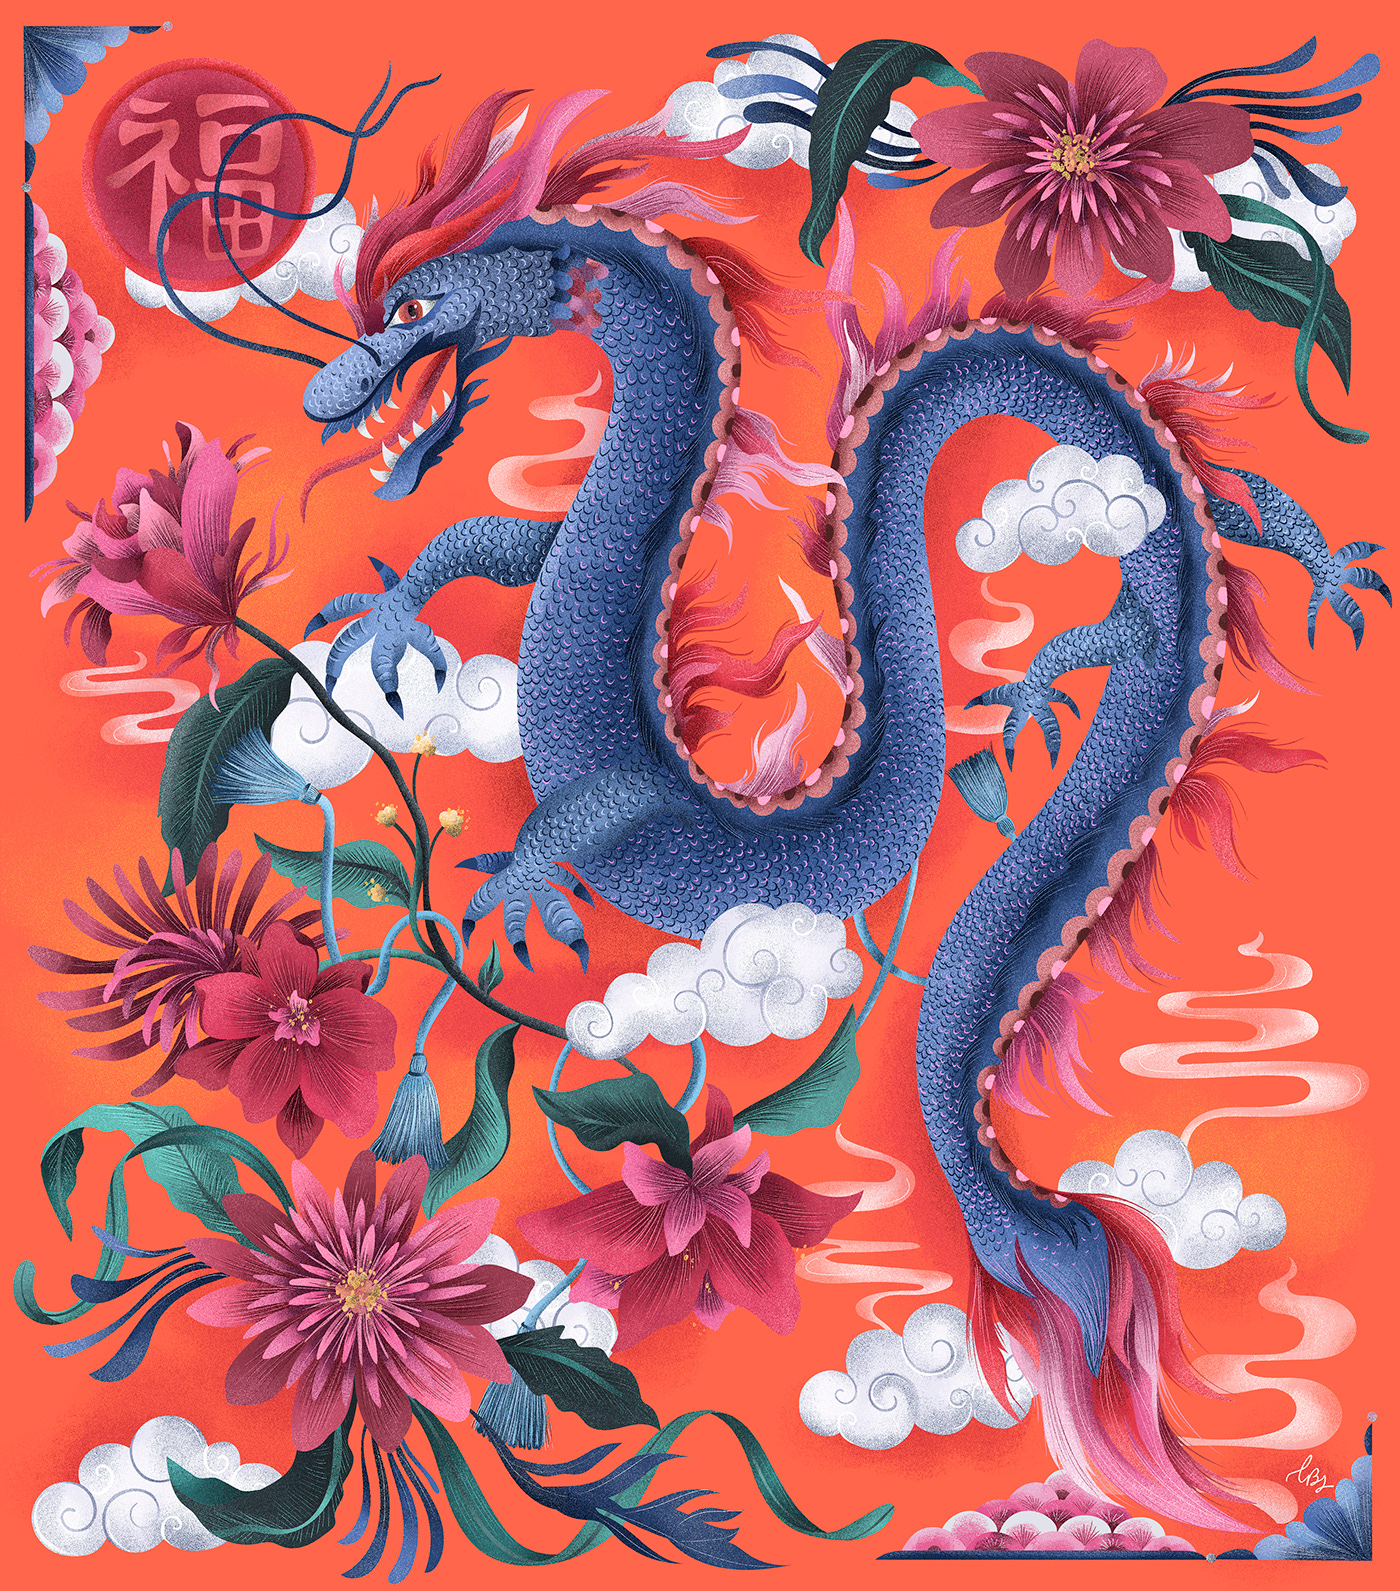 asian Lunar New Year dragon dragon illustration chinese lunar asia china vietnam Asian new year